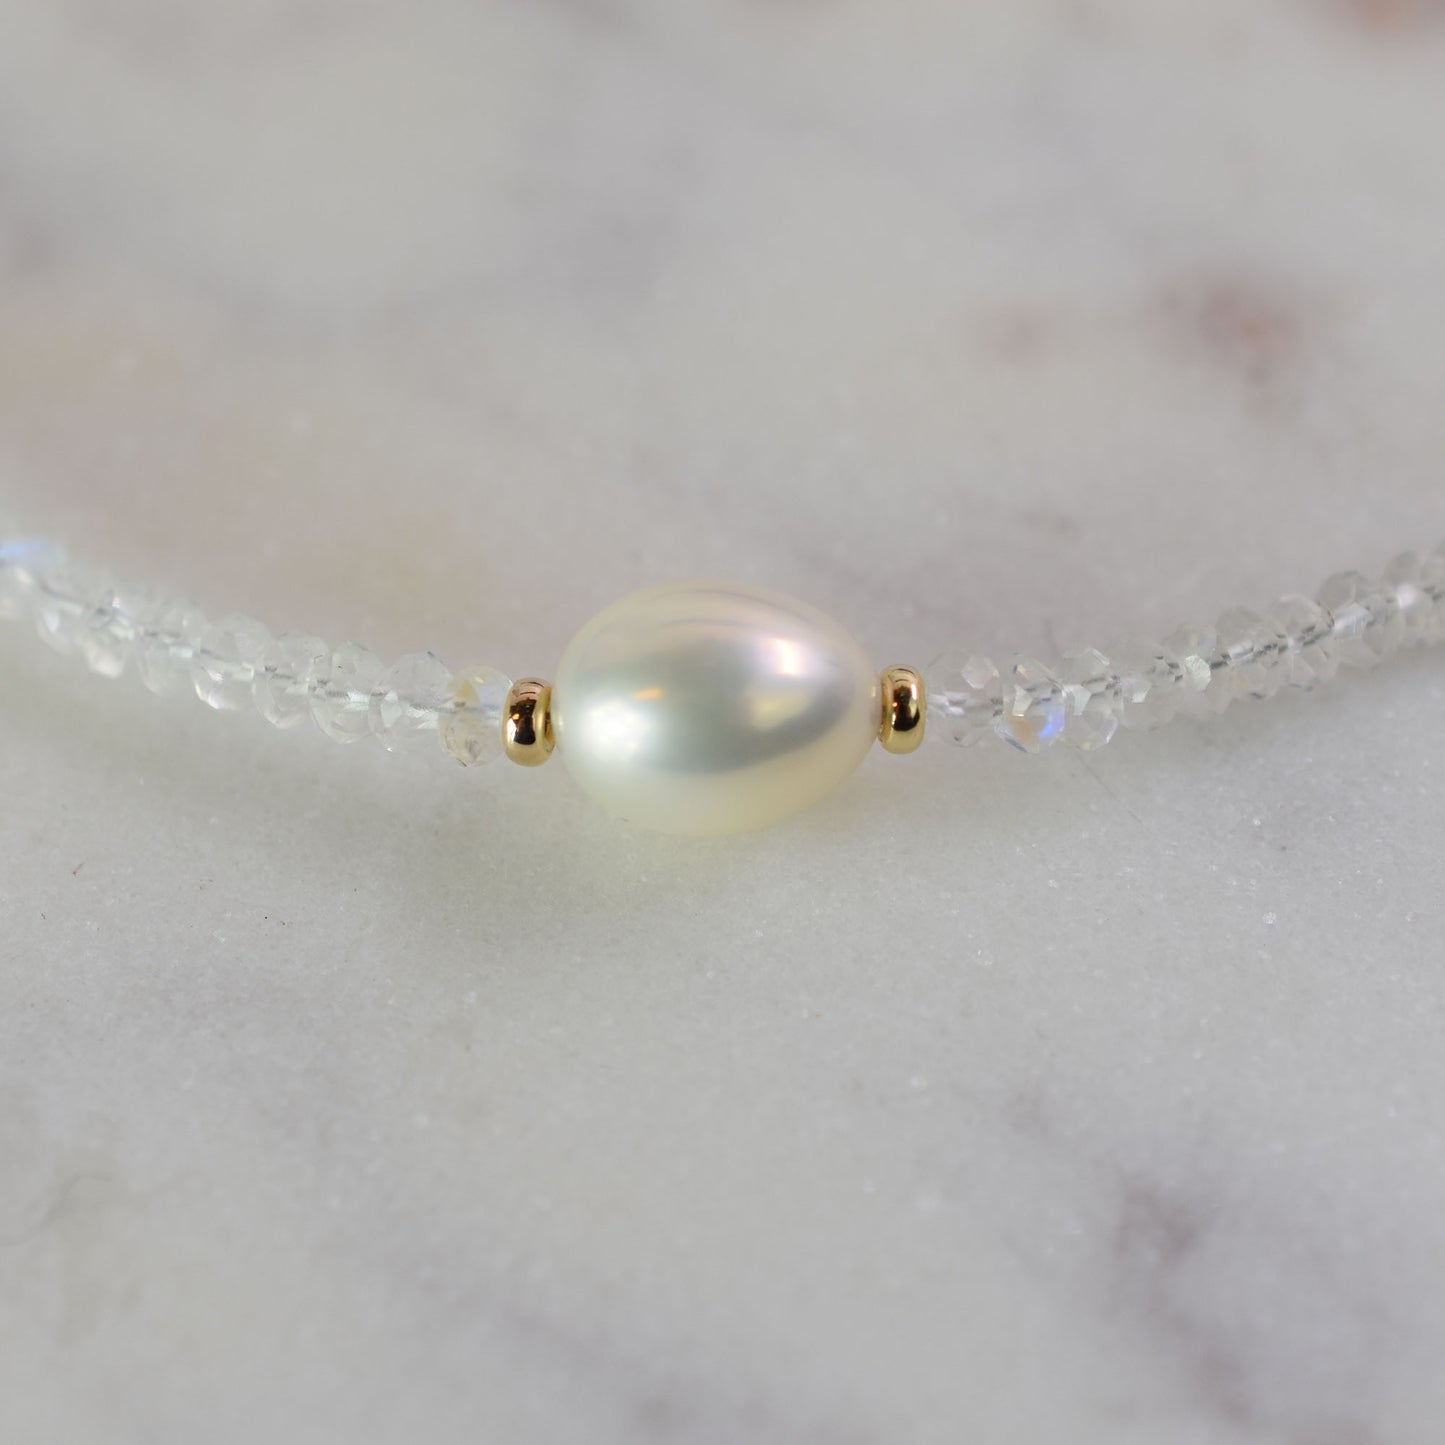 14k Gemstone Freshwater Pearl Center Necklace 17" Rainbow Moonstone & White Pearl